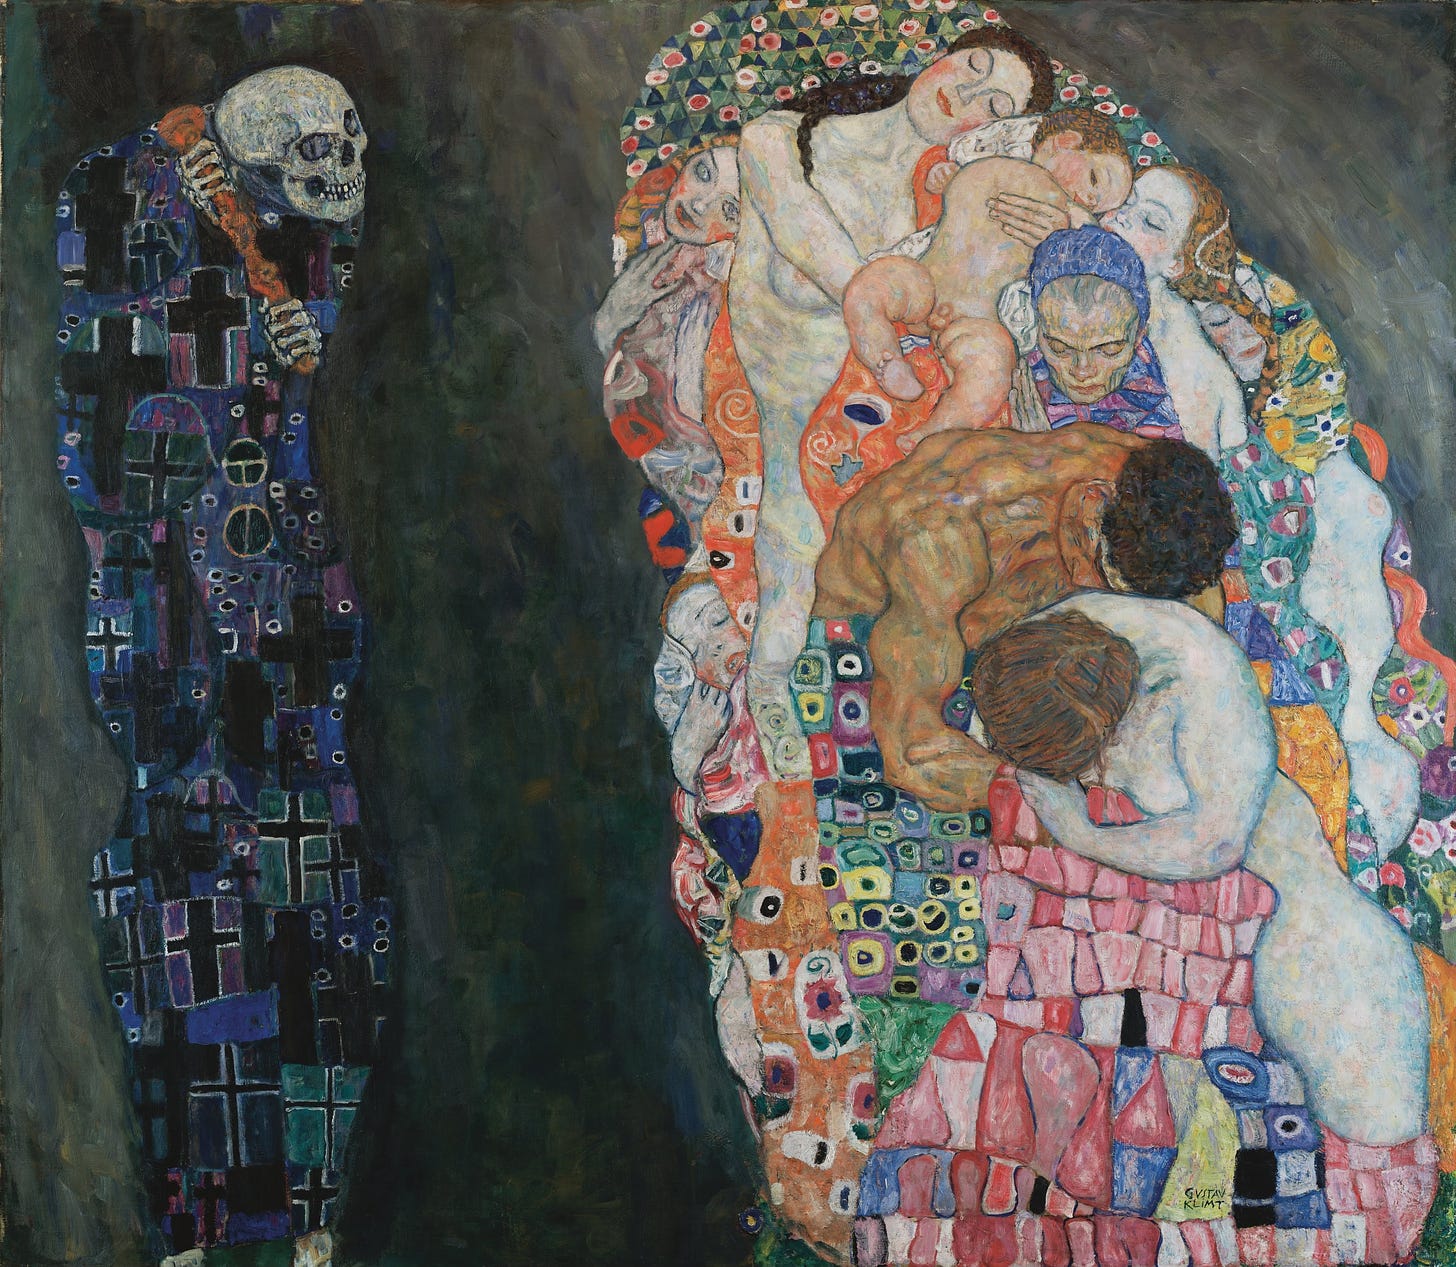 Death and Life (1910-15) by Gustav Klimt